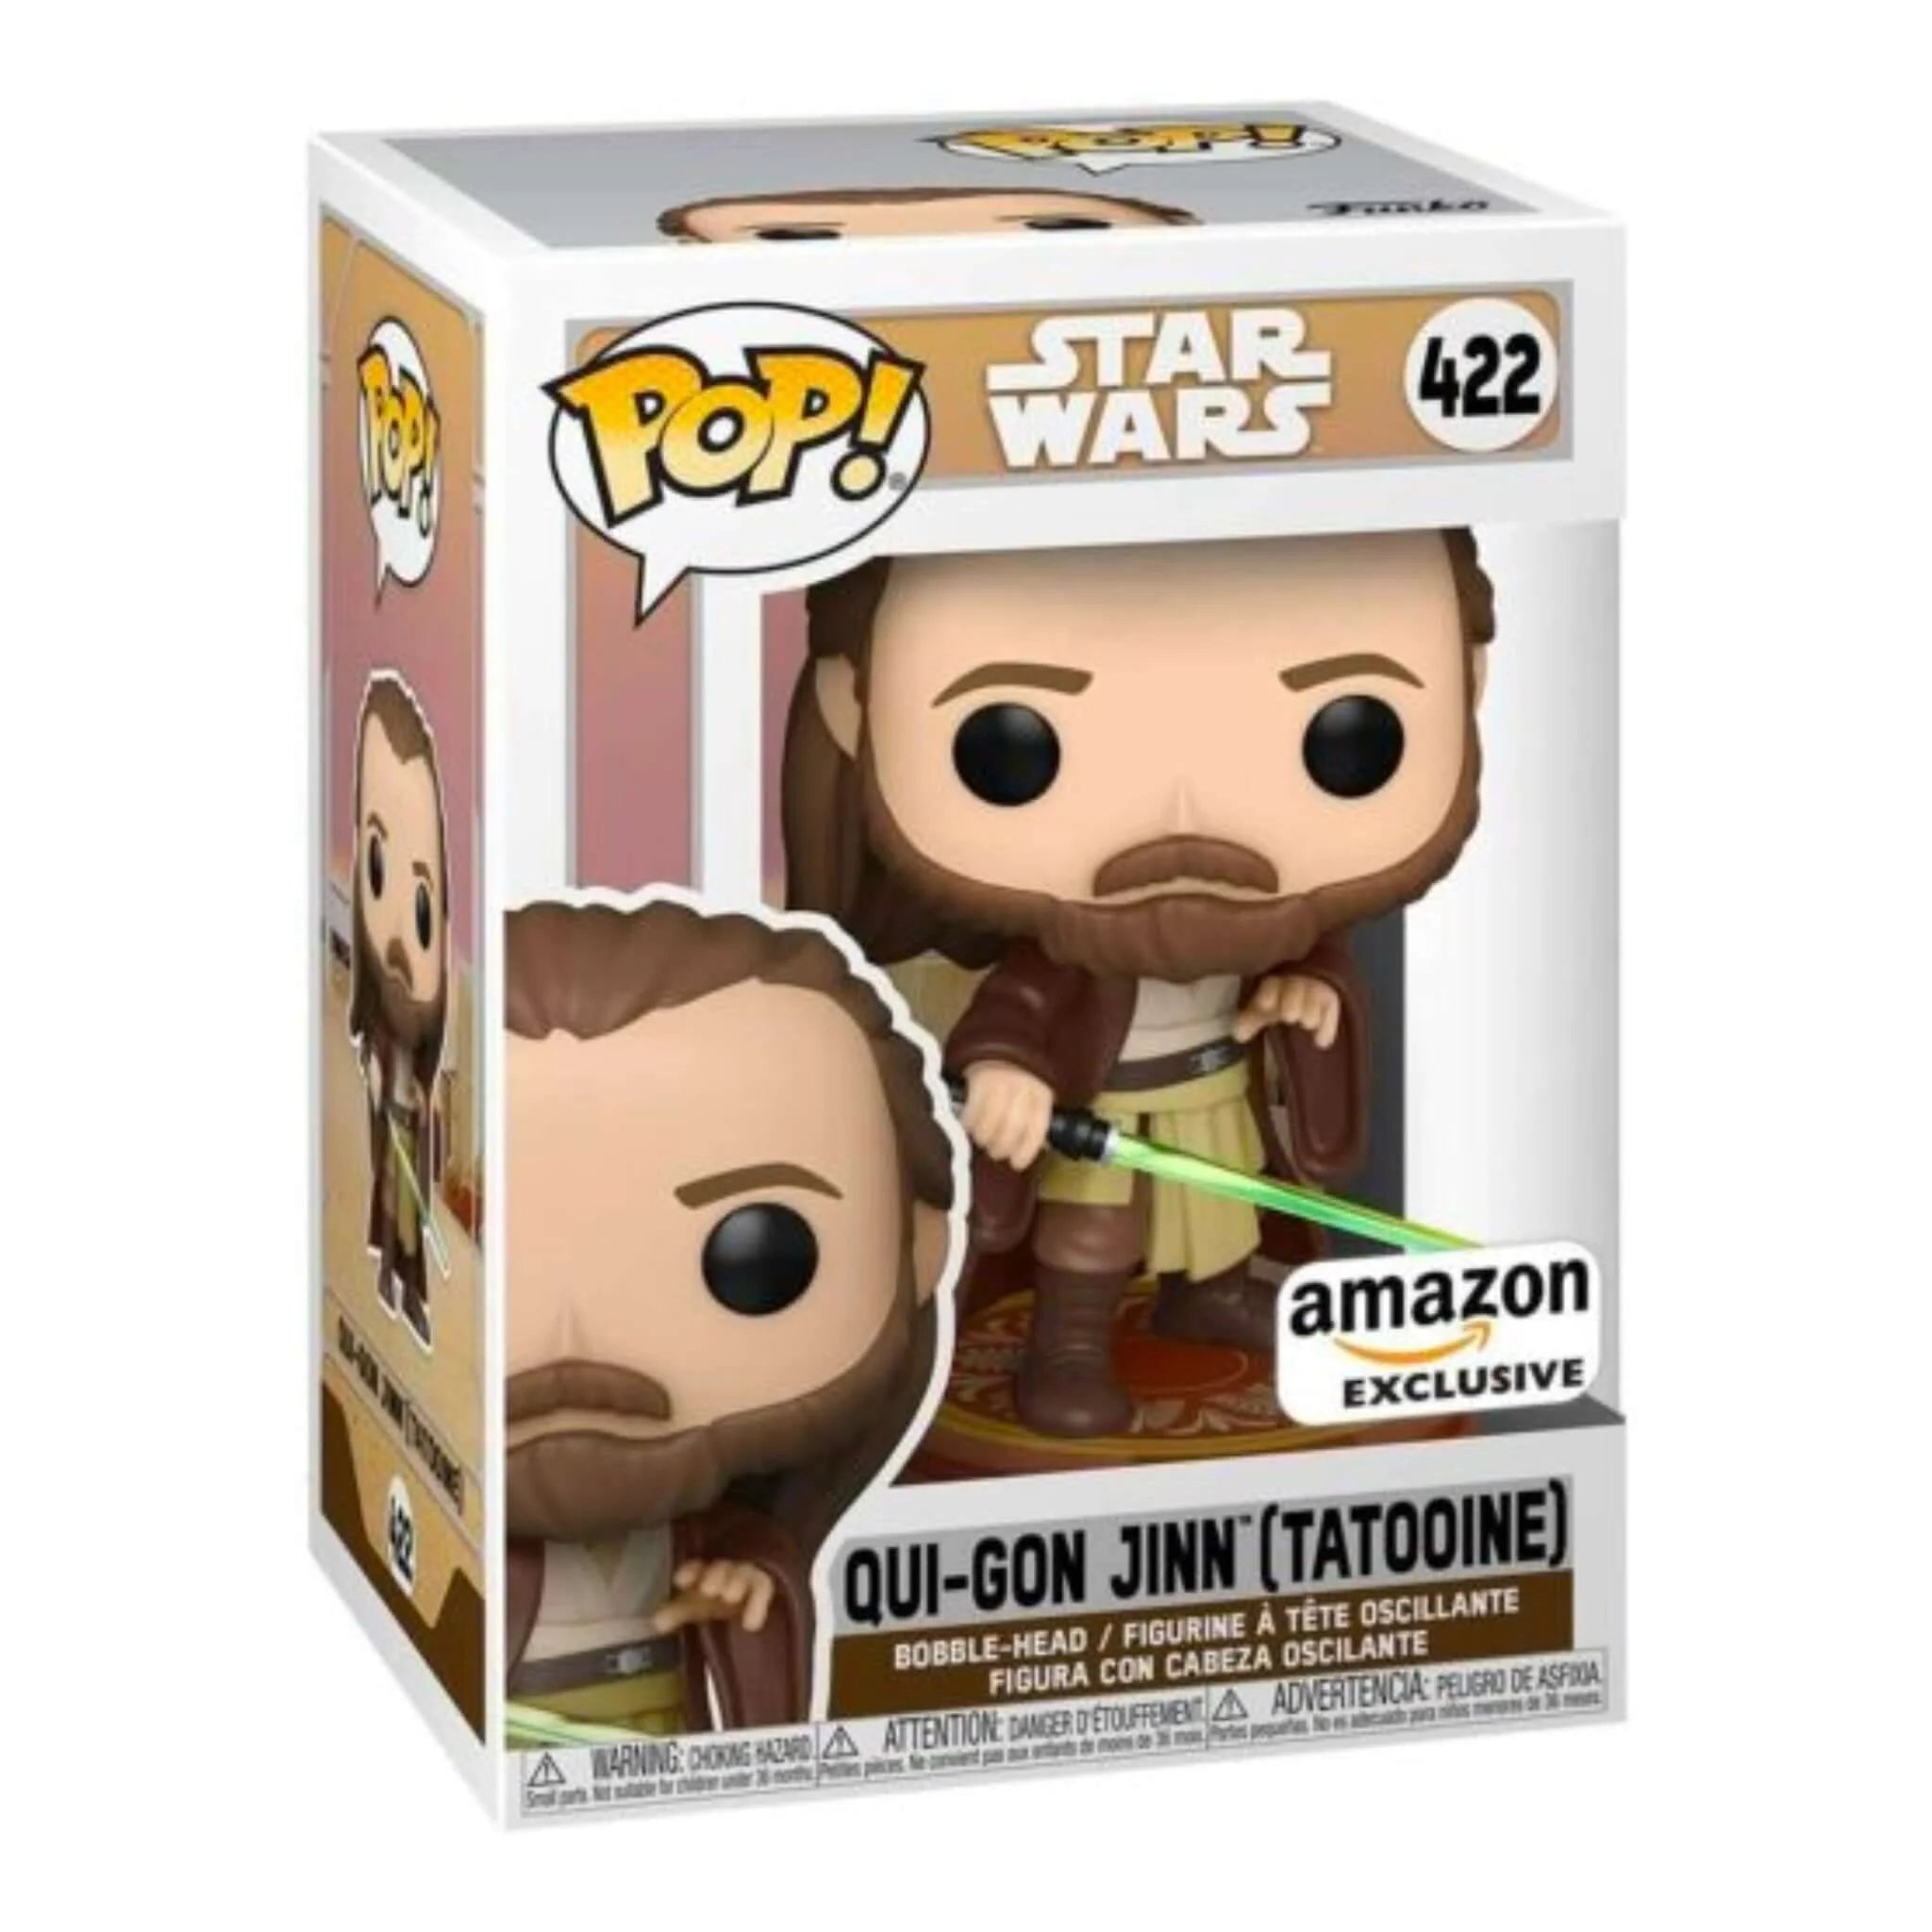 Funko Pop Star Wars - Qui-gon Jinn (Tatooine) exclusivo Amazon #422